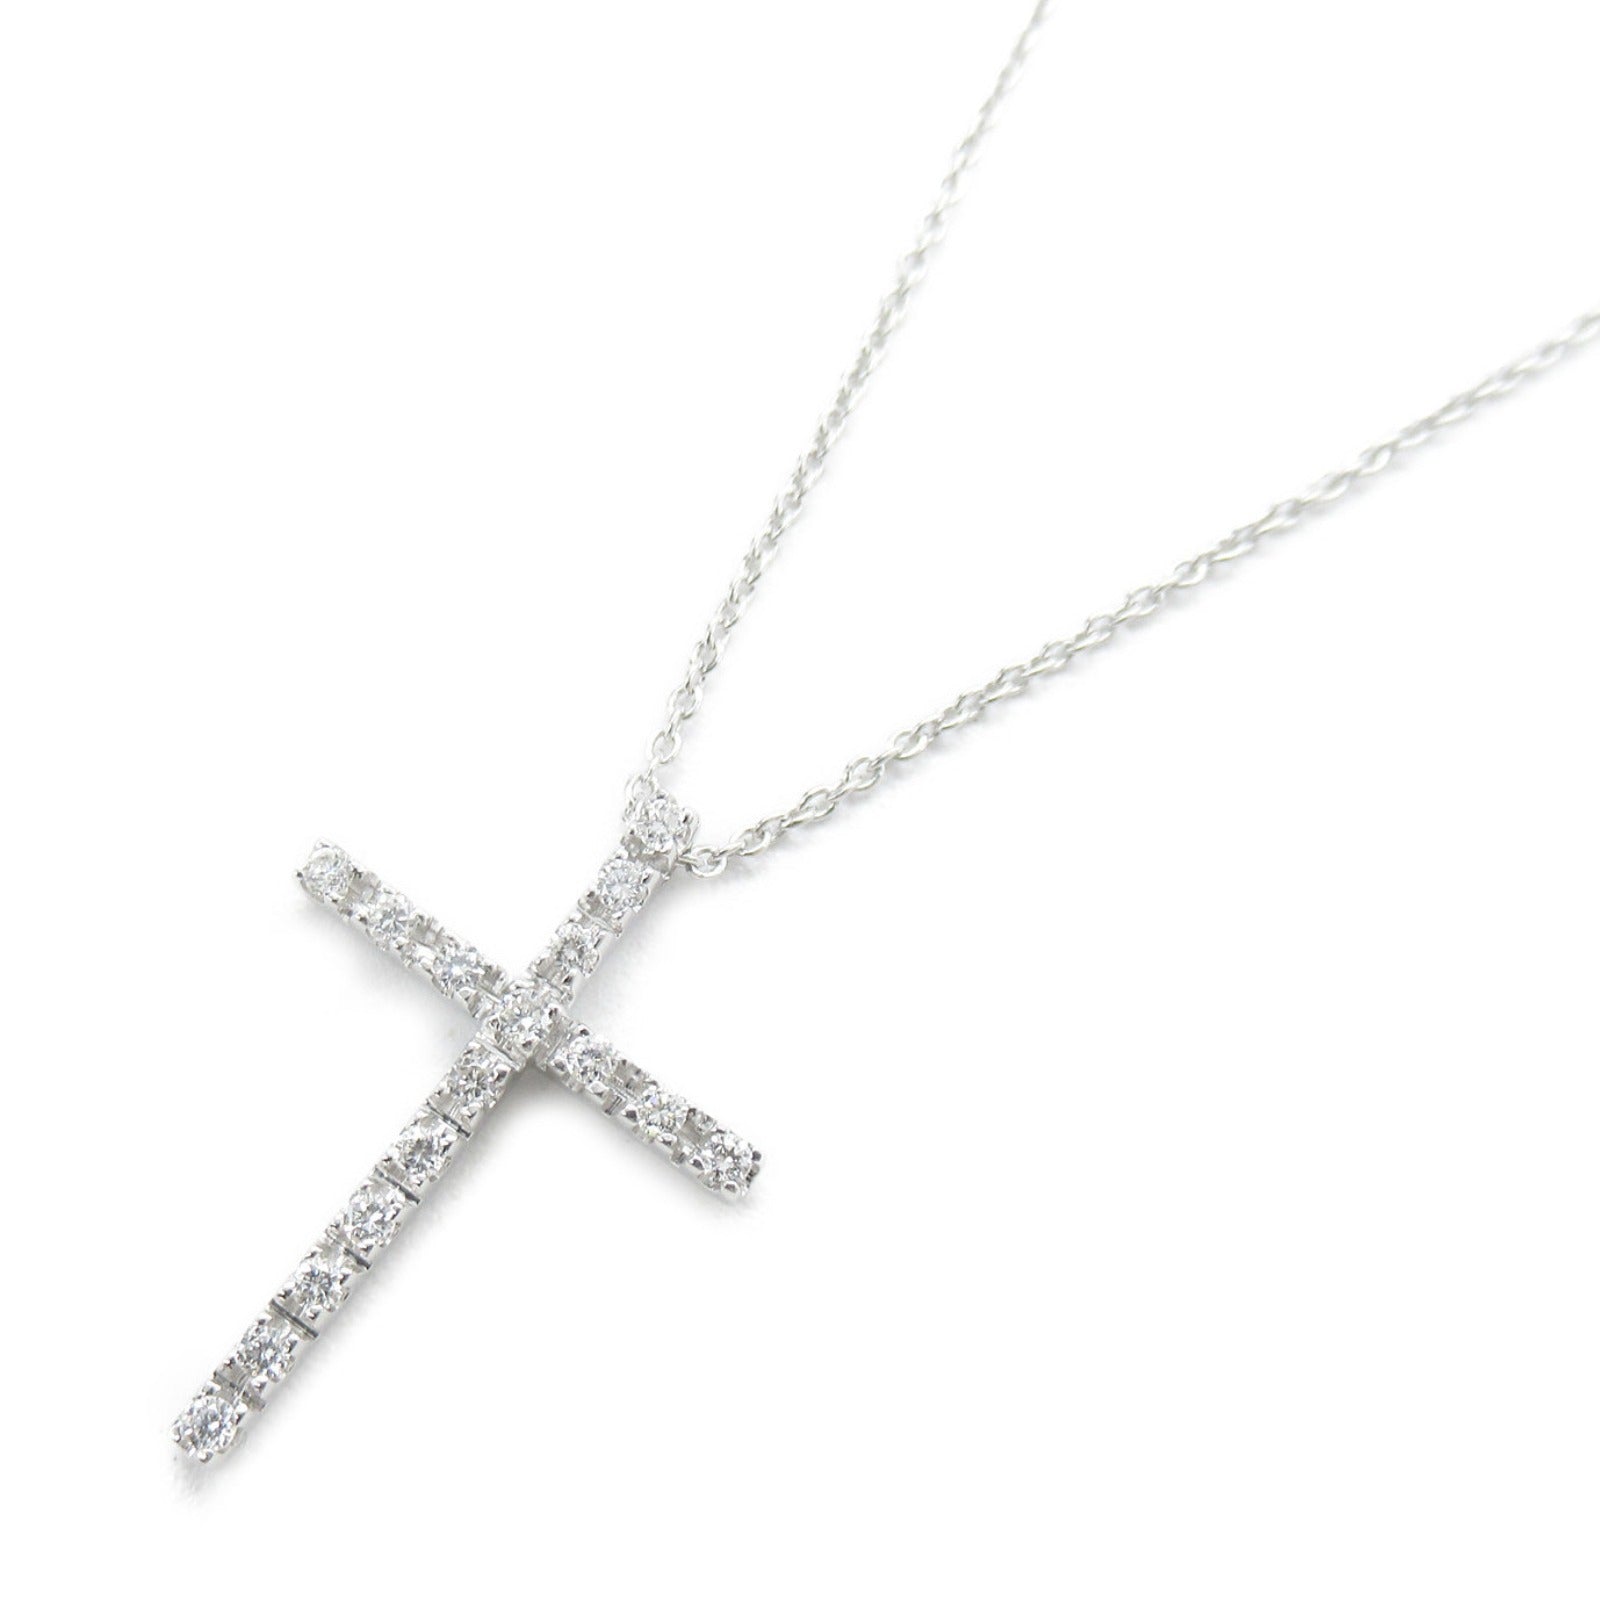 STAR JEWELRY diamond cross necklace K18WG (white g) diamond  clean